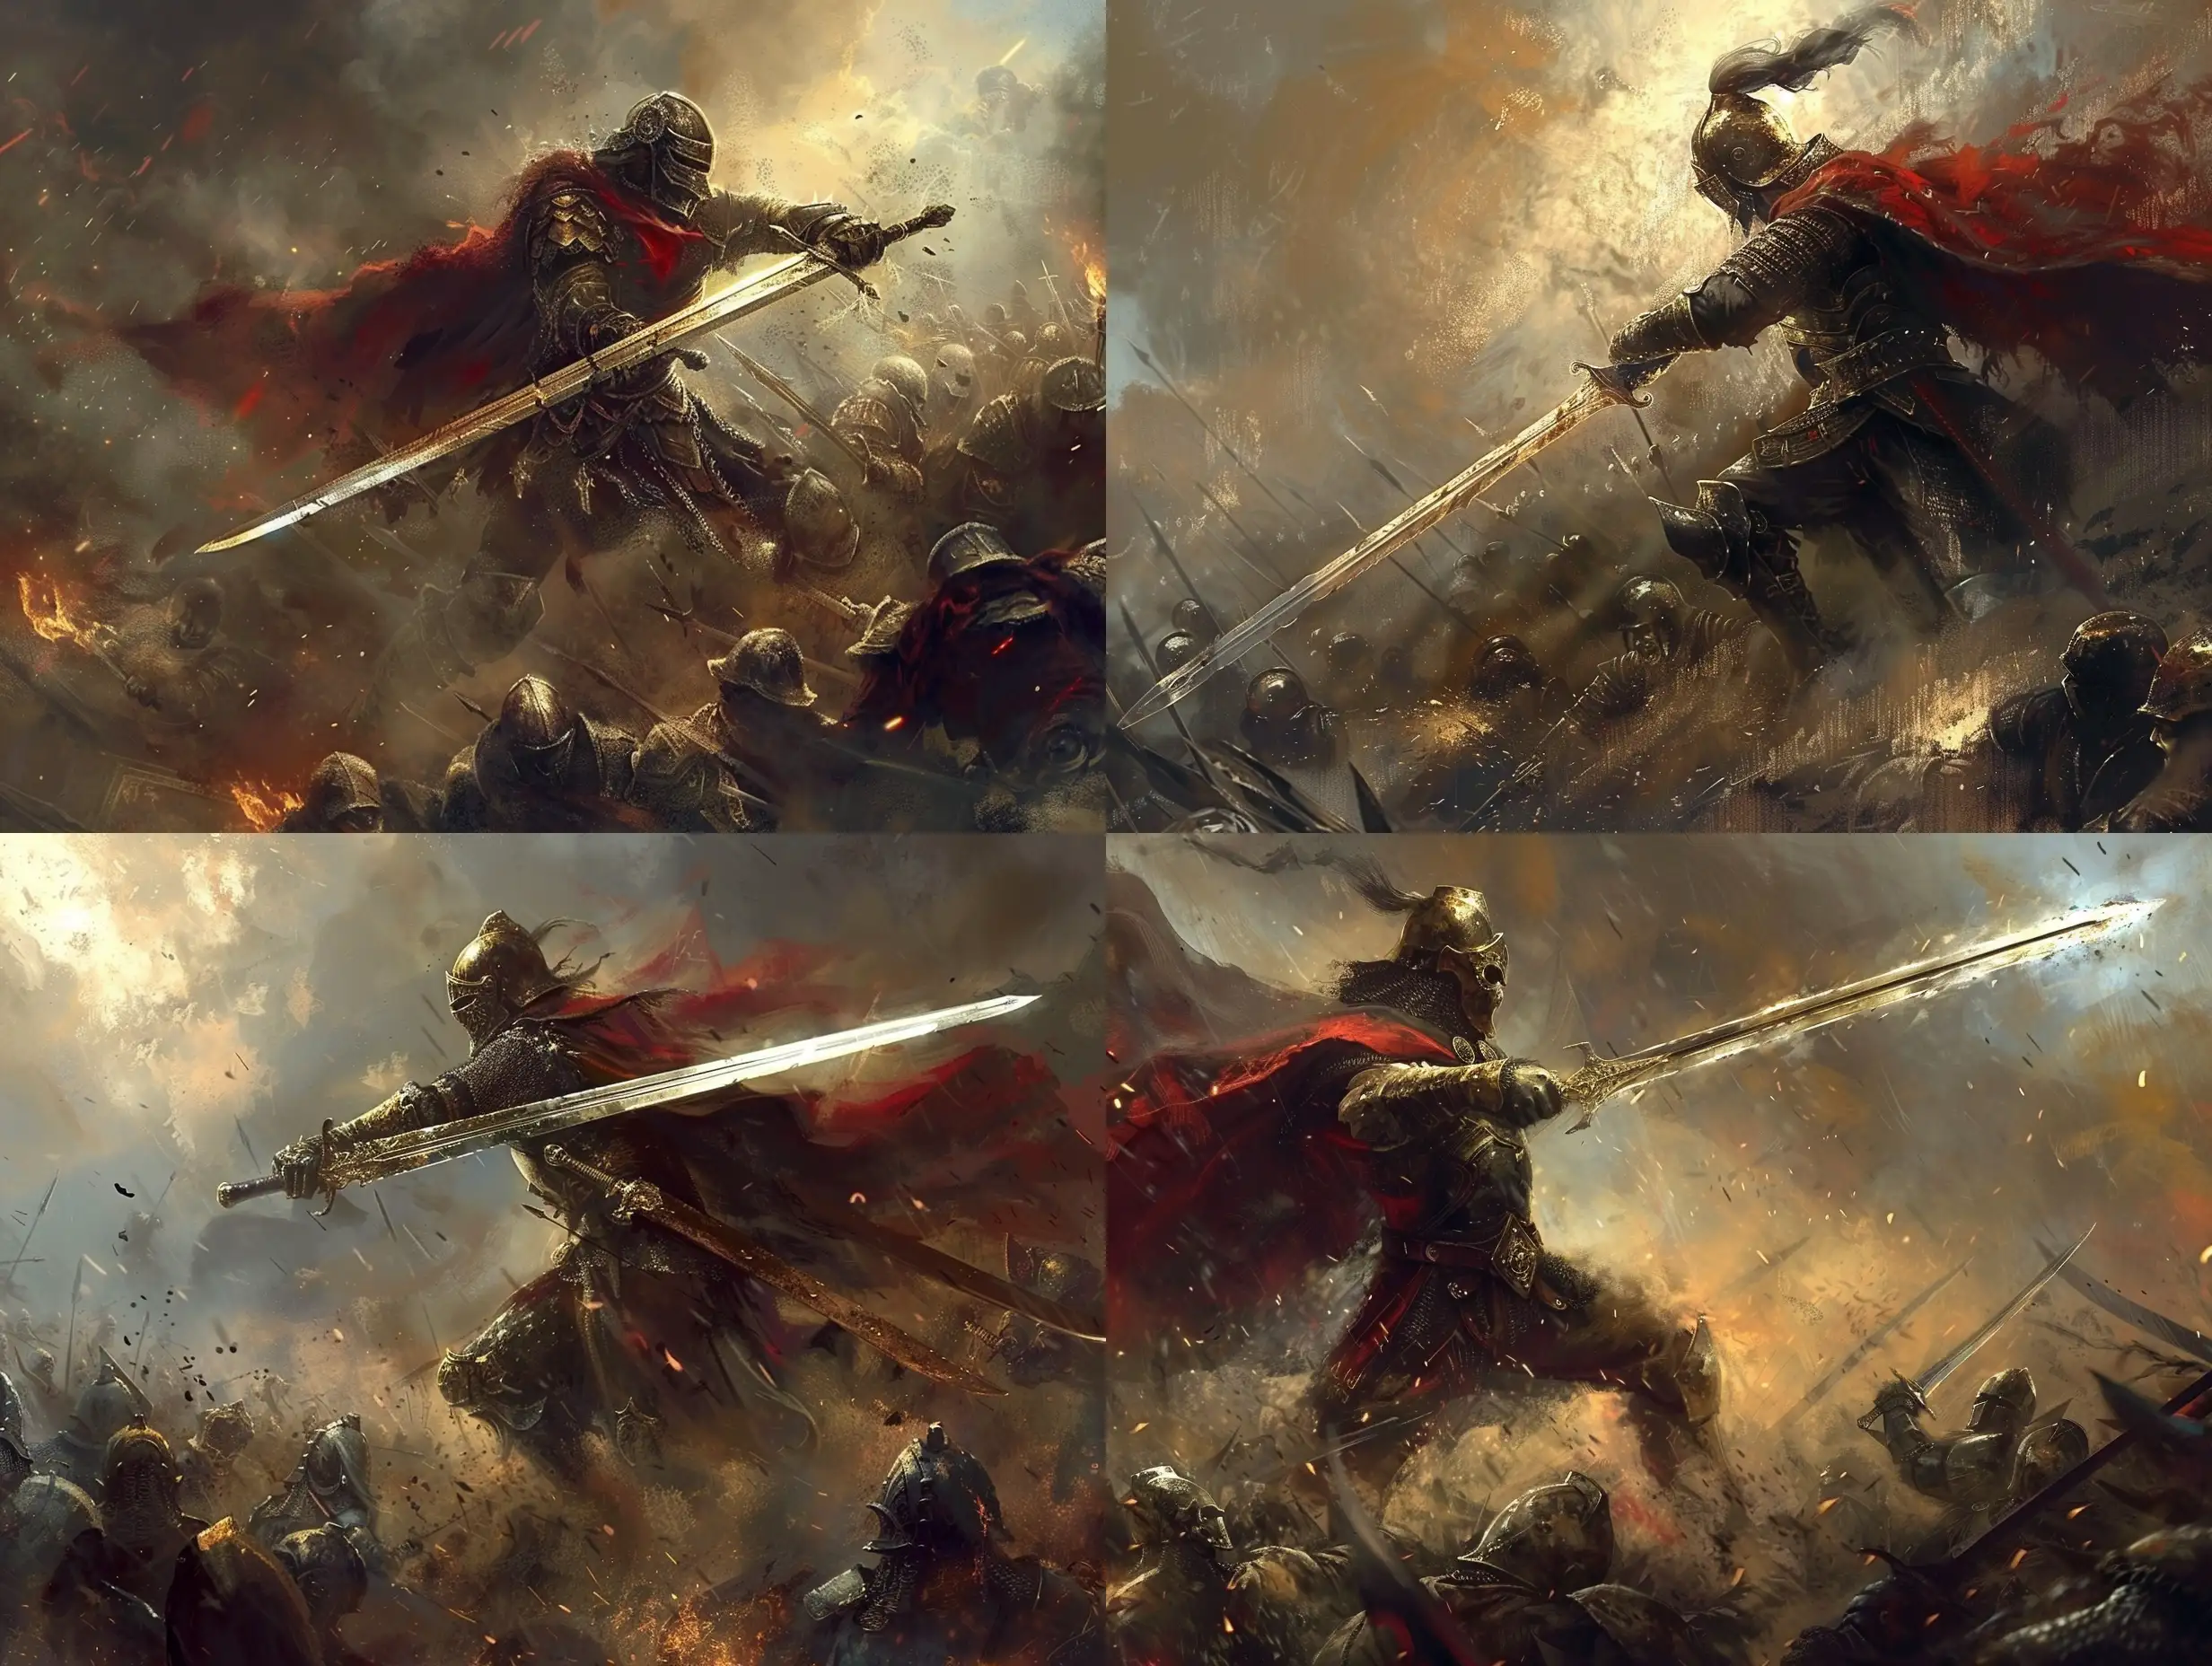 Majestic-Warrior-Battling-Hordes-with-Sword